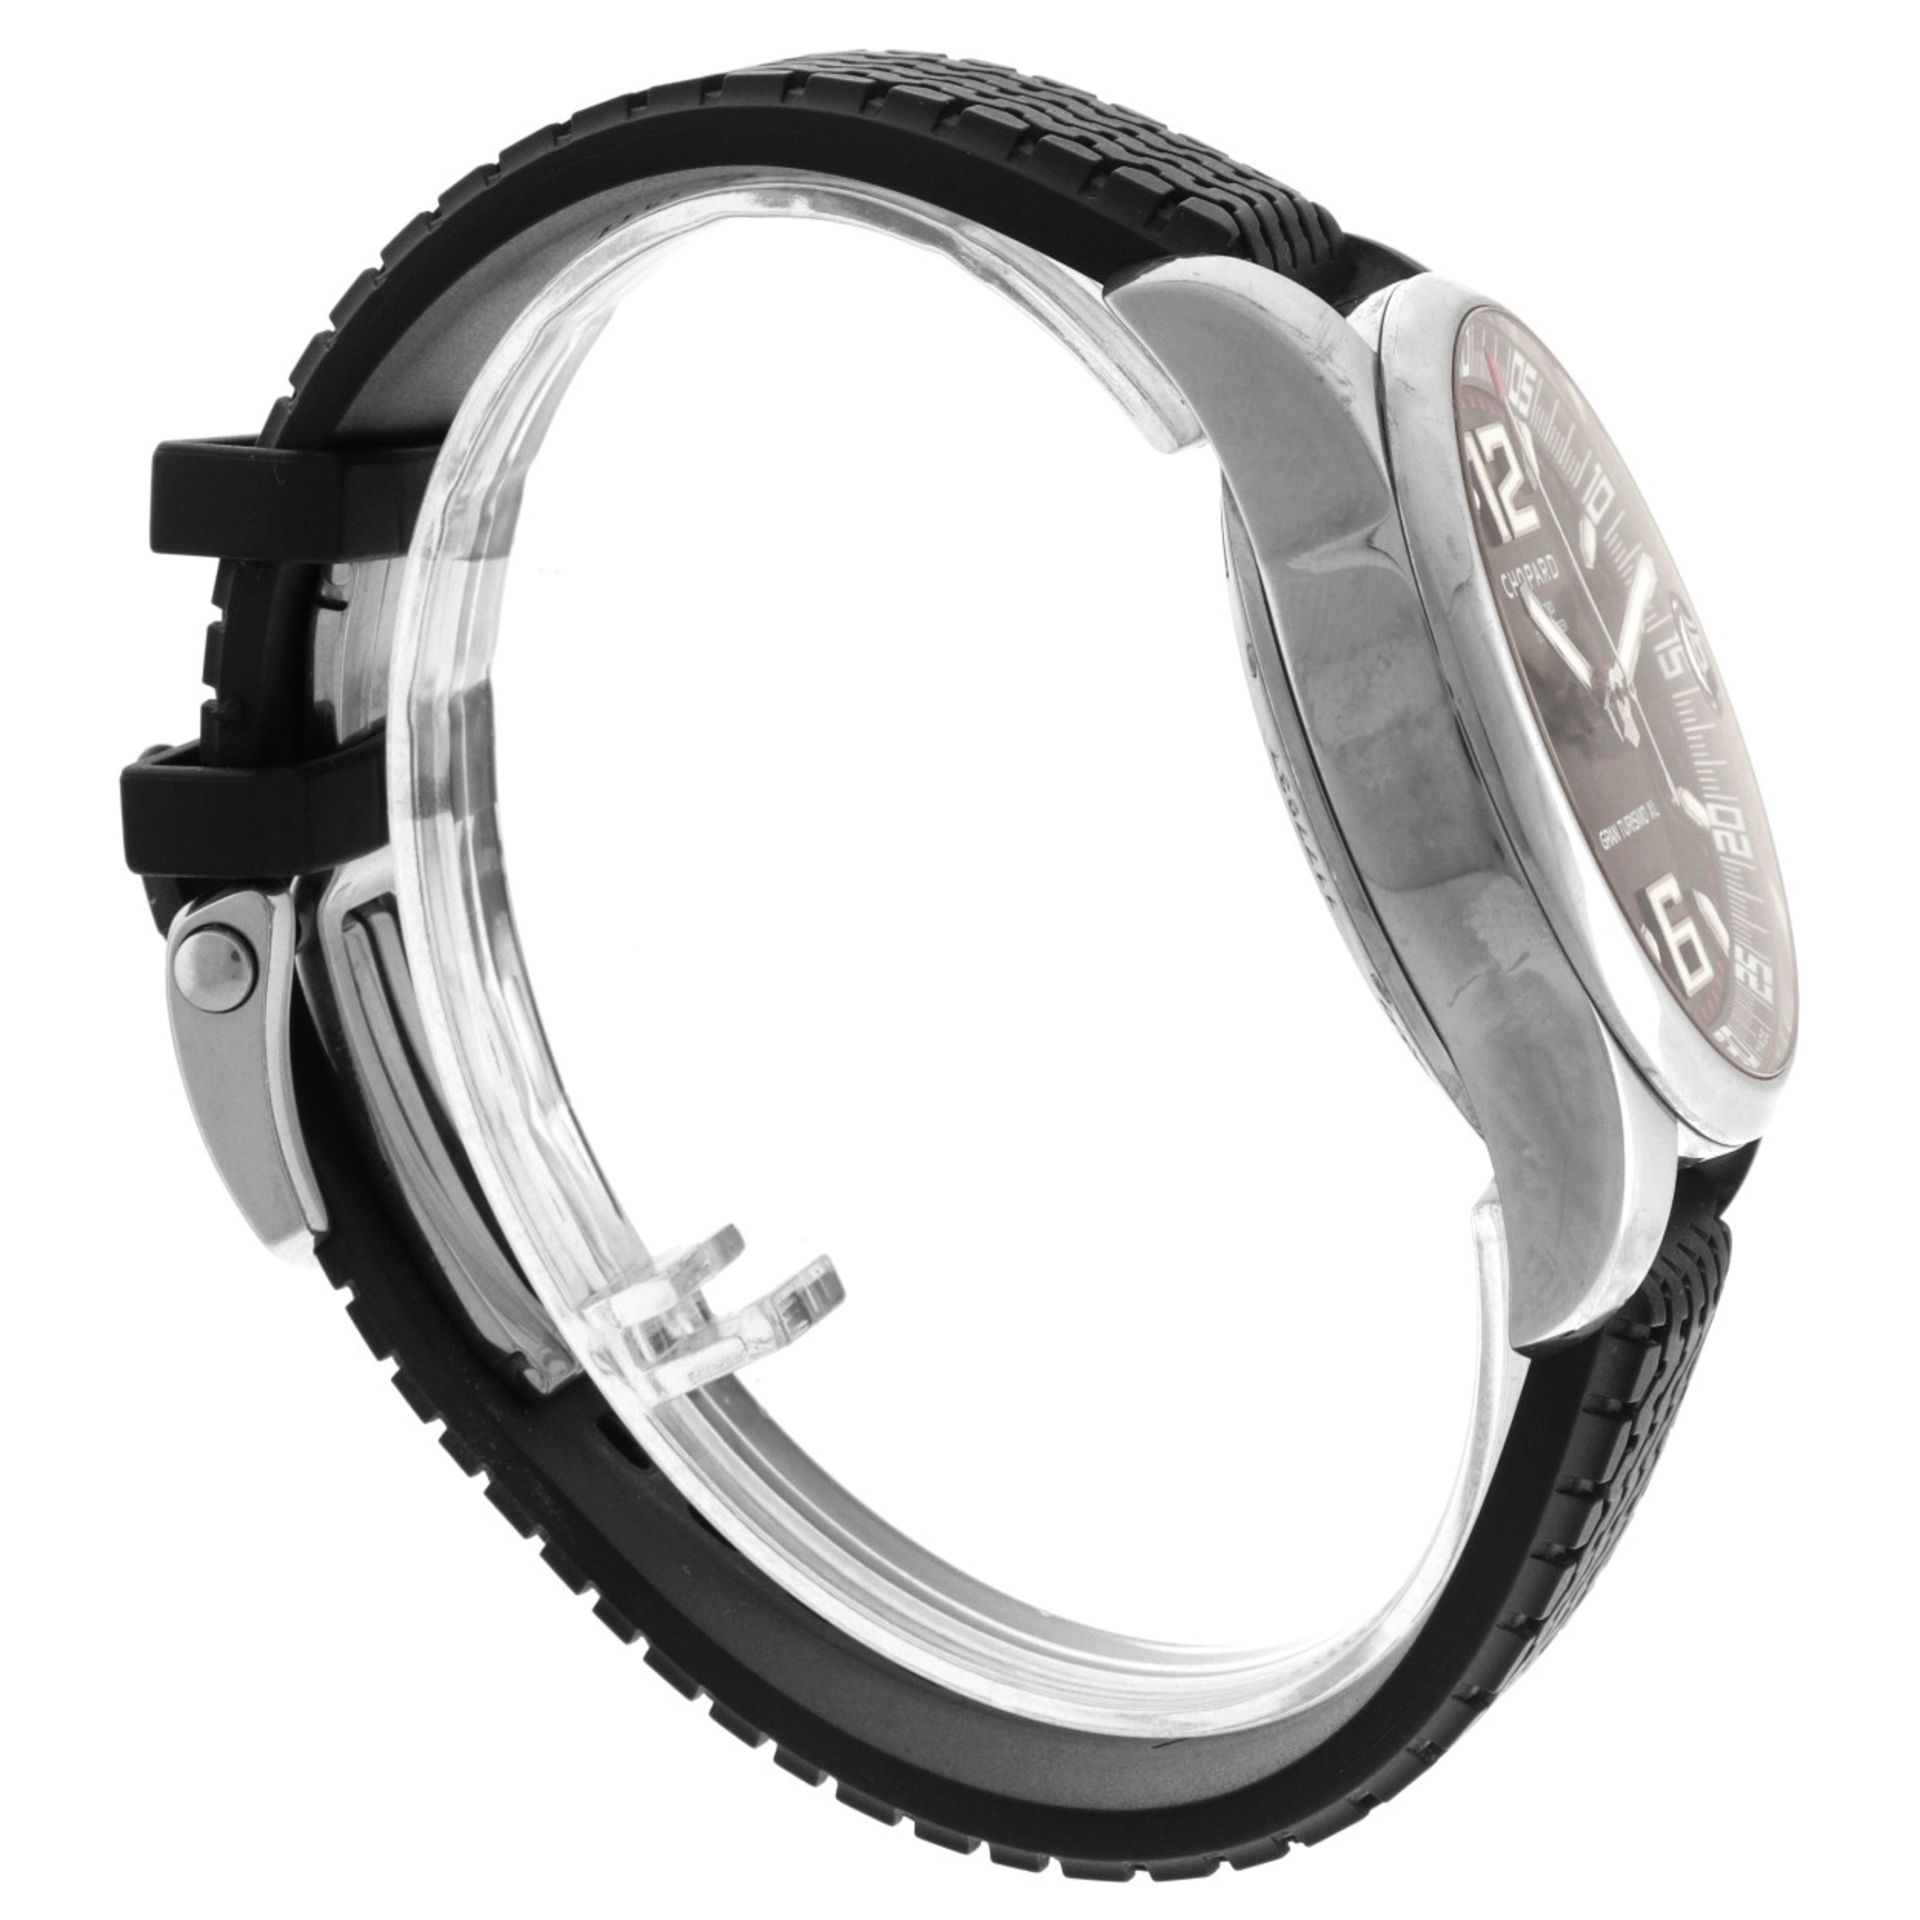 No Reserve - Chopard Mille Miglia Gran Turismo XL 8997 - Men's watch. - Image 4 of 5